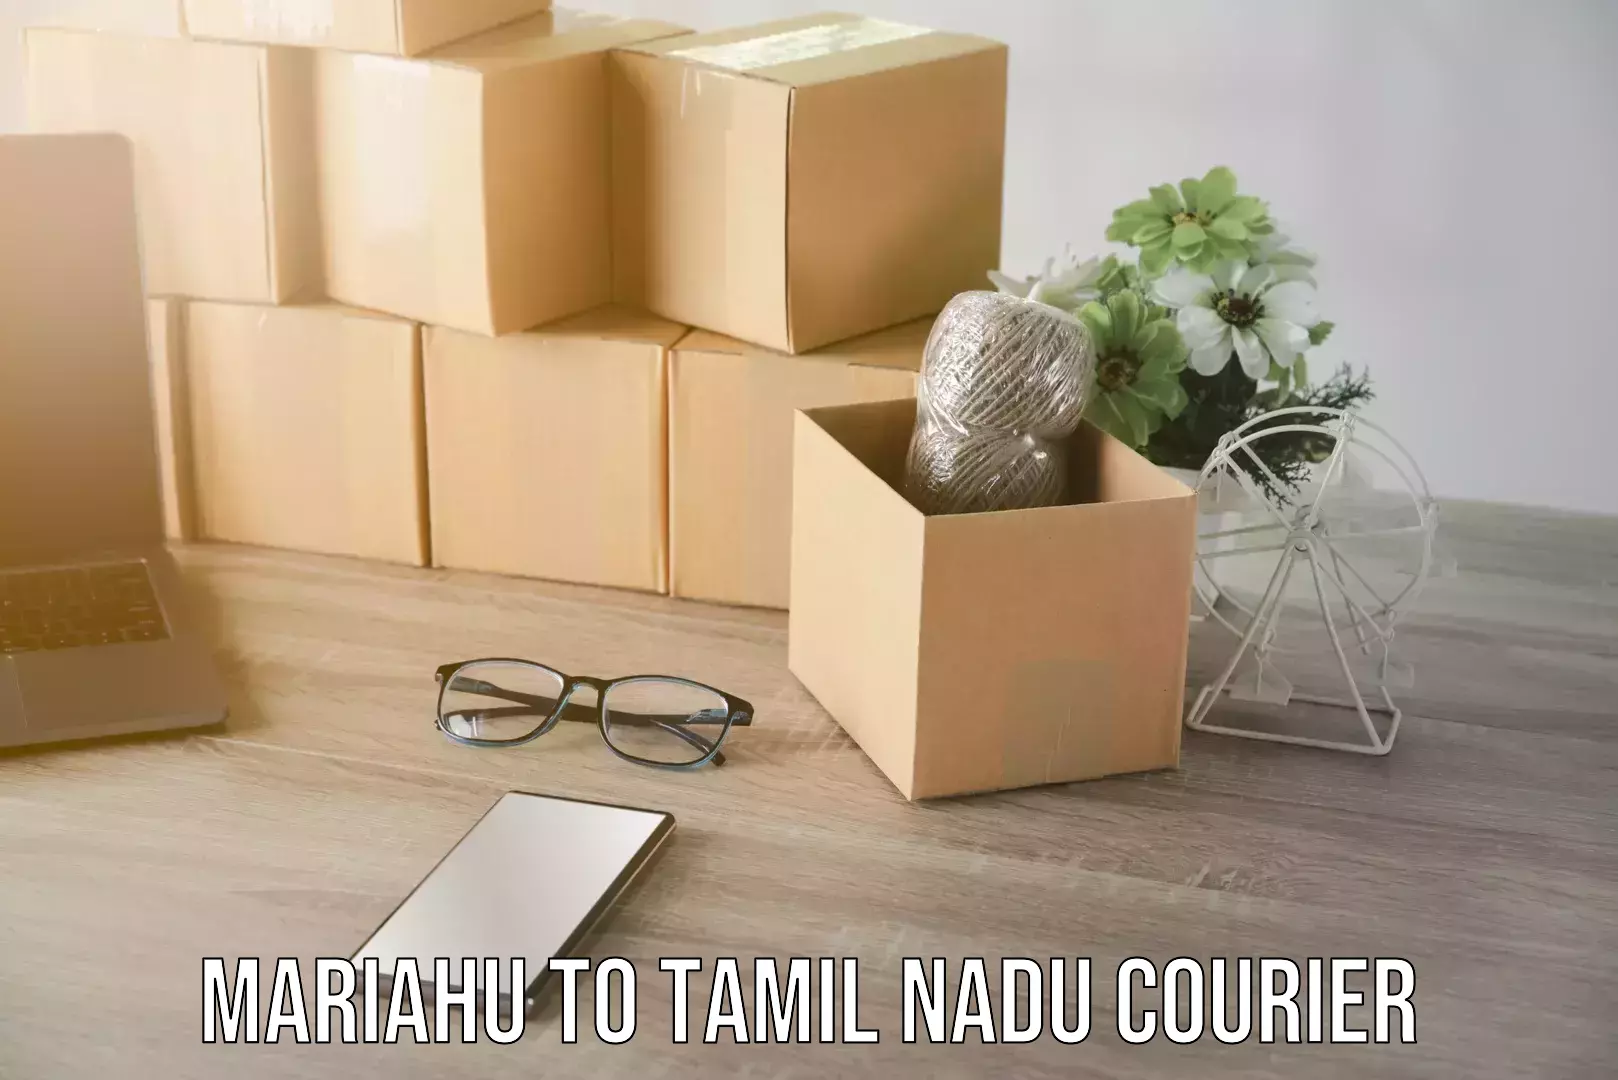 Furniture moving experts Mariahu to Tamil Nadu